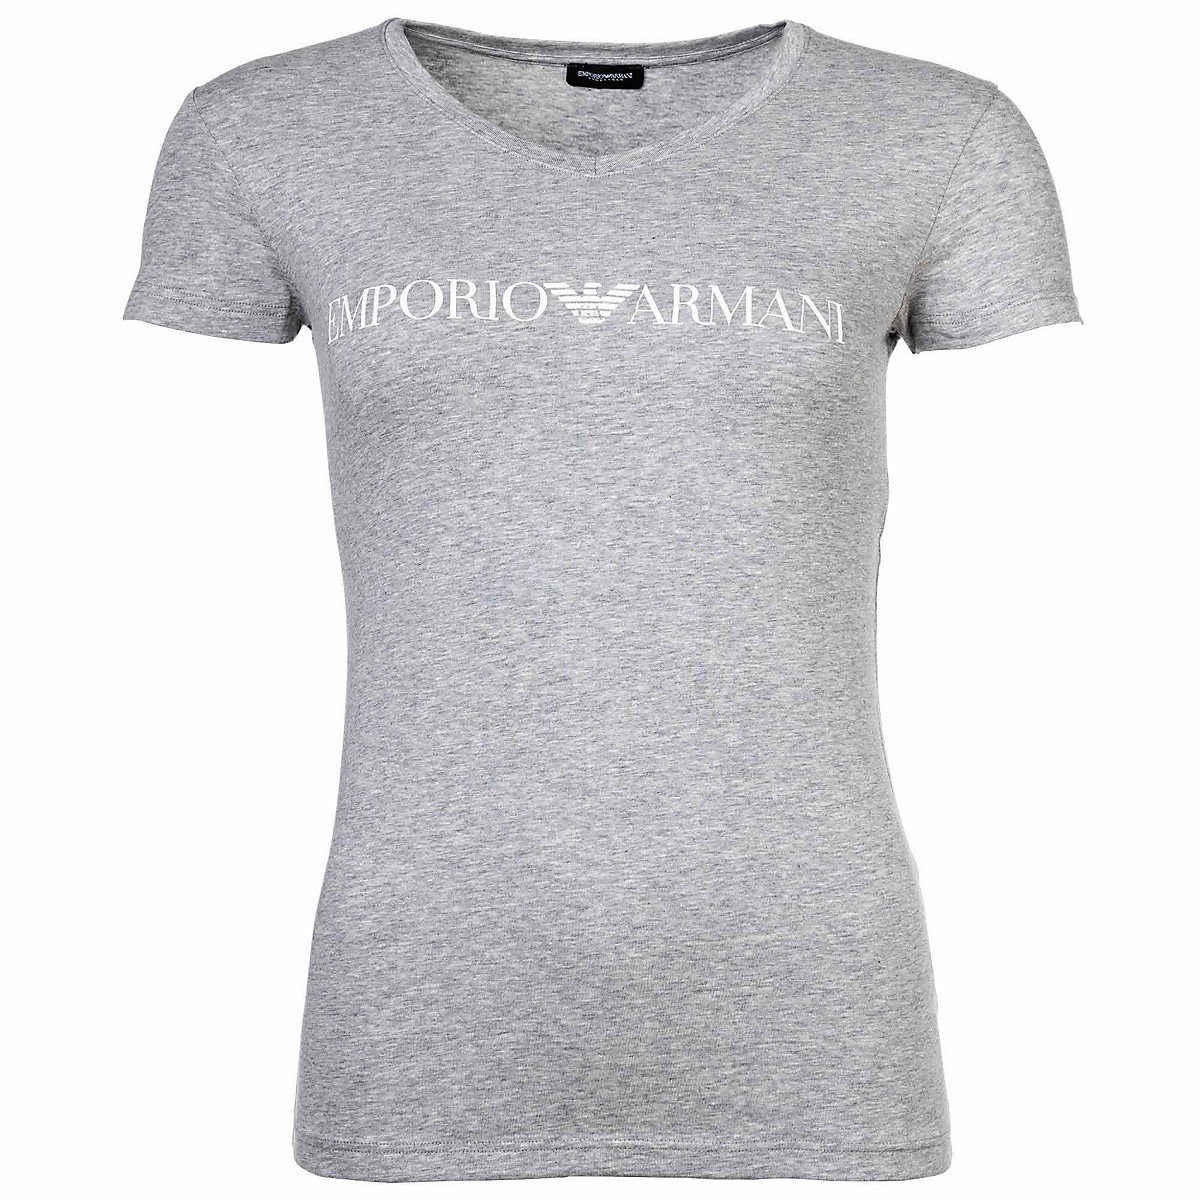 Emporio Armani Damen T-Shirt V-Neck Kurzarm Loungewear Stretch Cotton T-Shirts grau